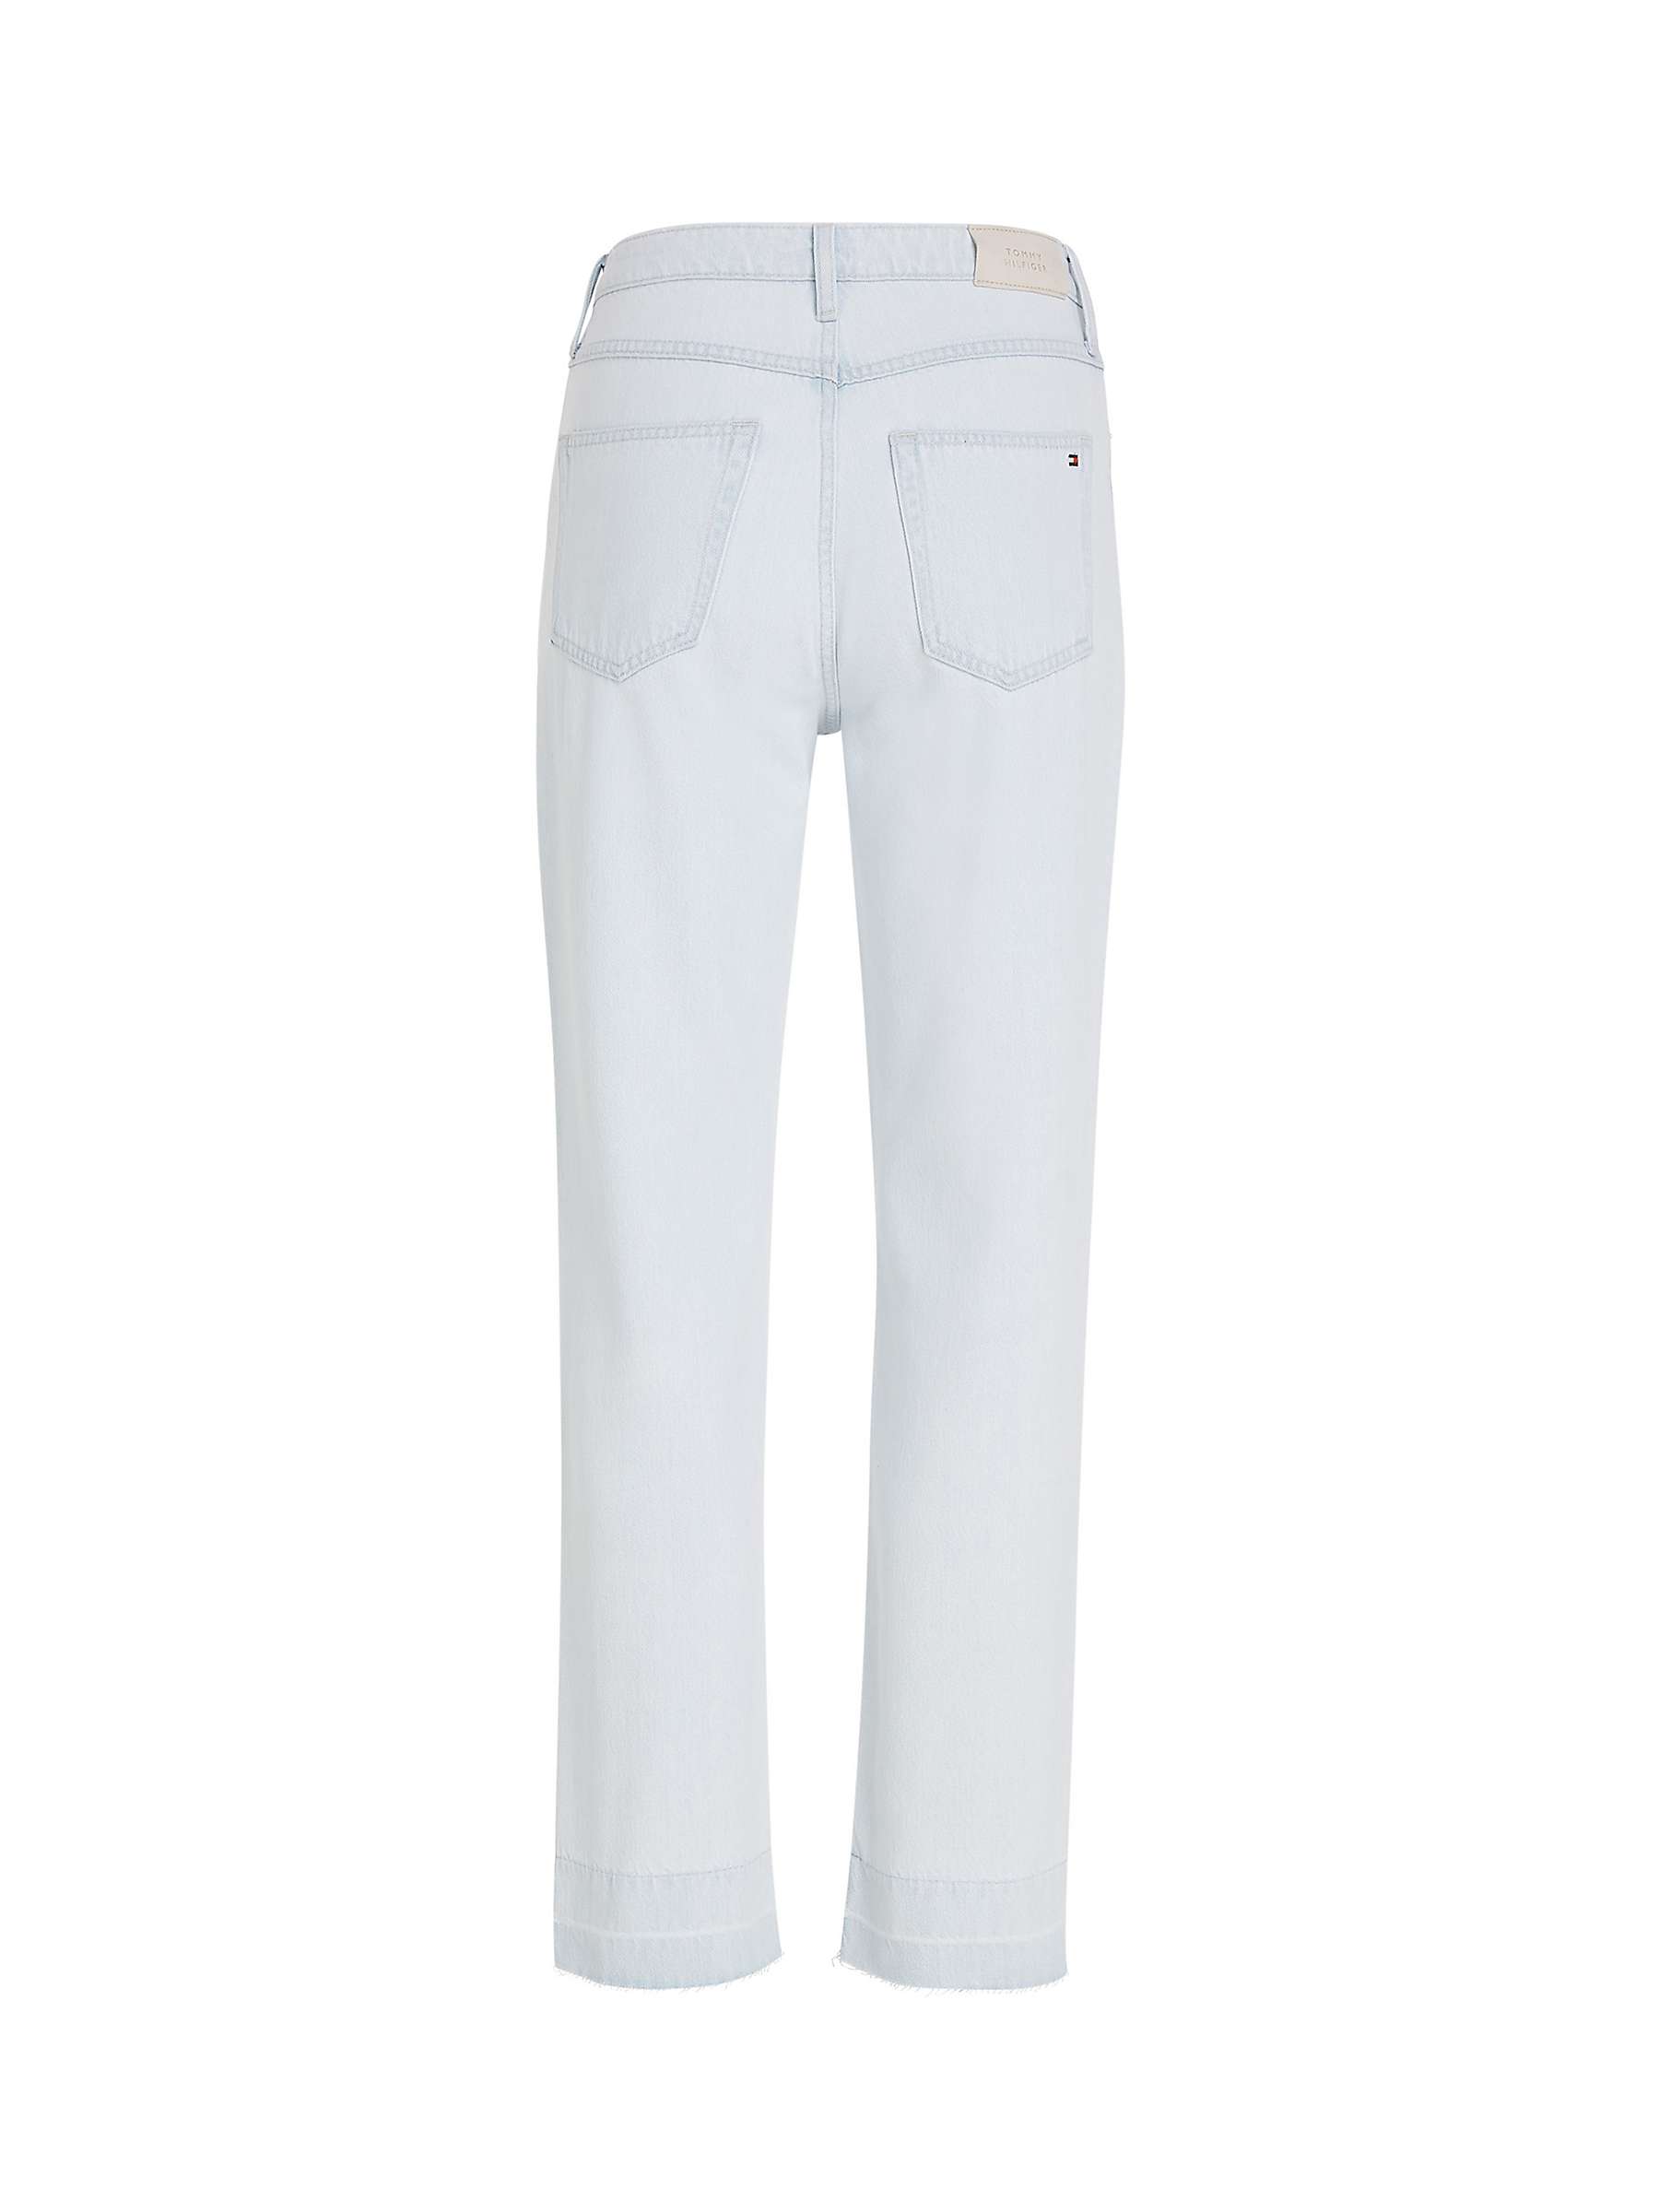 Buy Tommy Hilfiger Women's Kira Straight Jeans, Light Blue Online at johnlewis.com